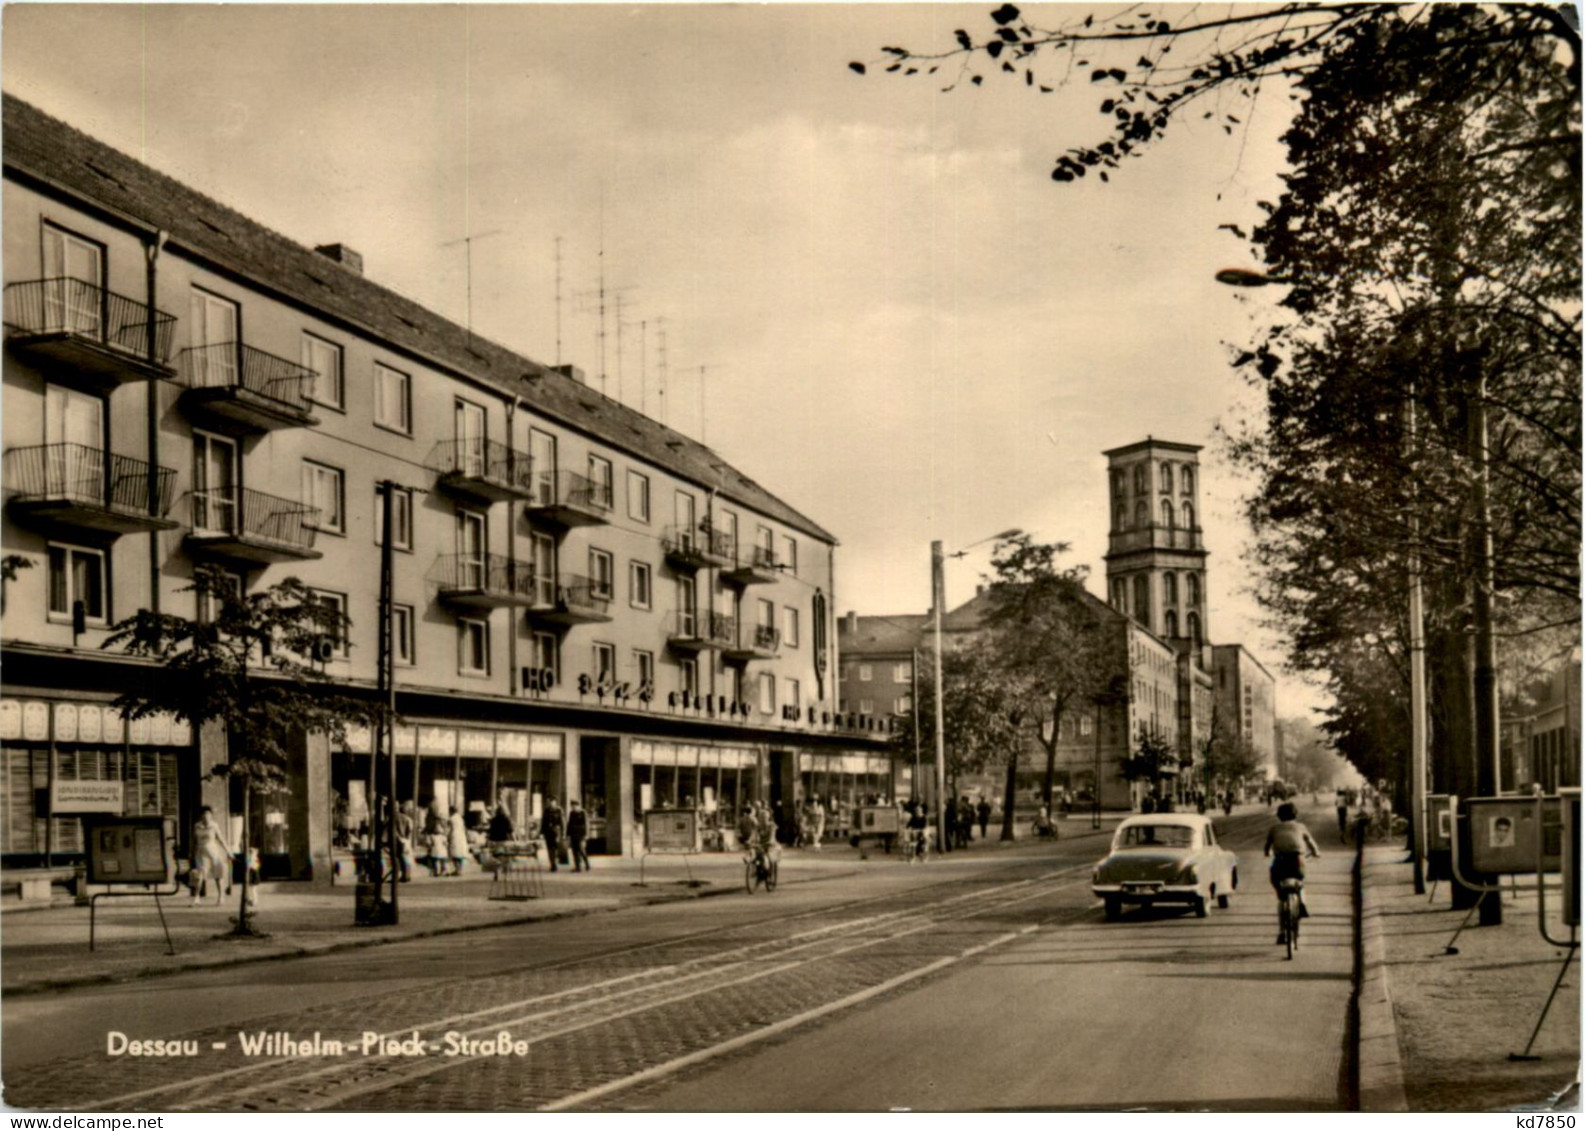 Dessau - Wilhelm-Pieck-Strasse - Dessau